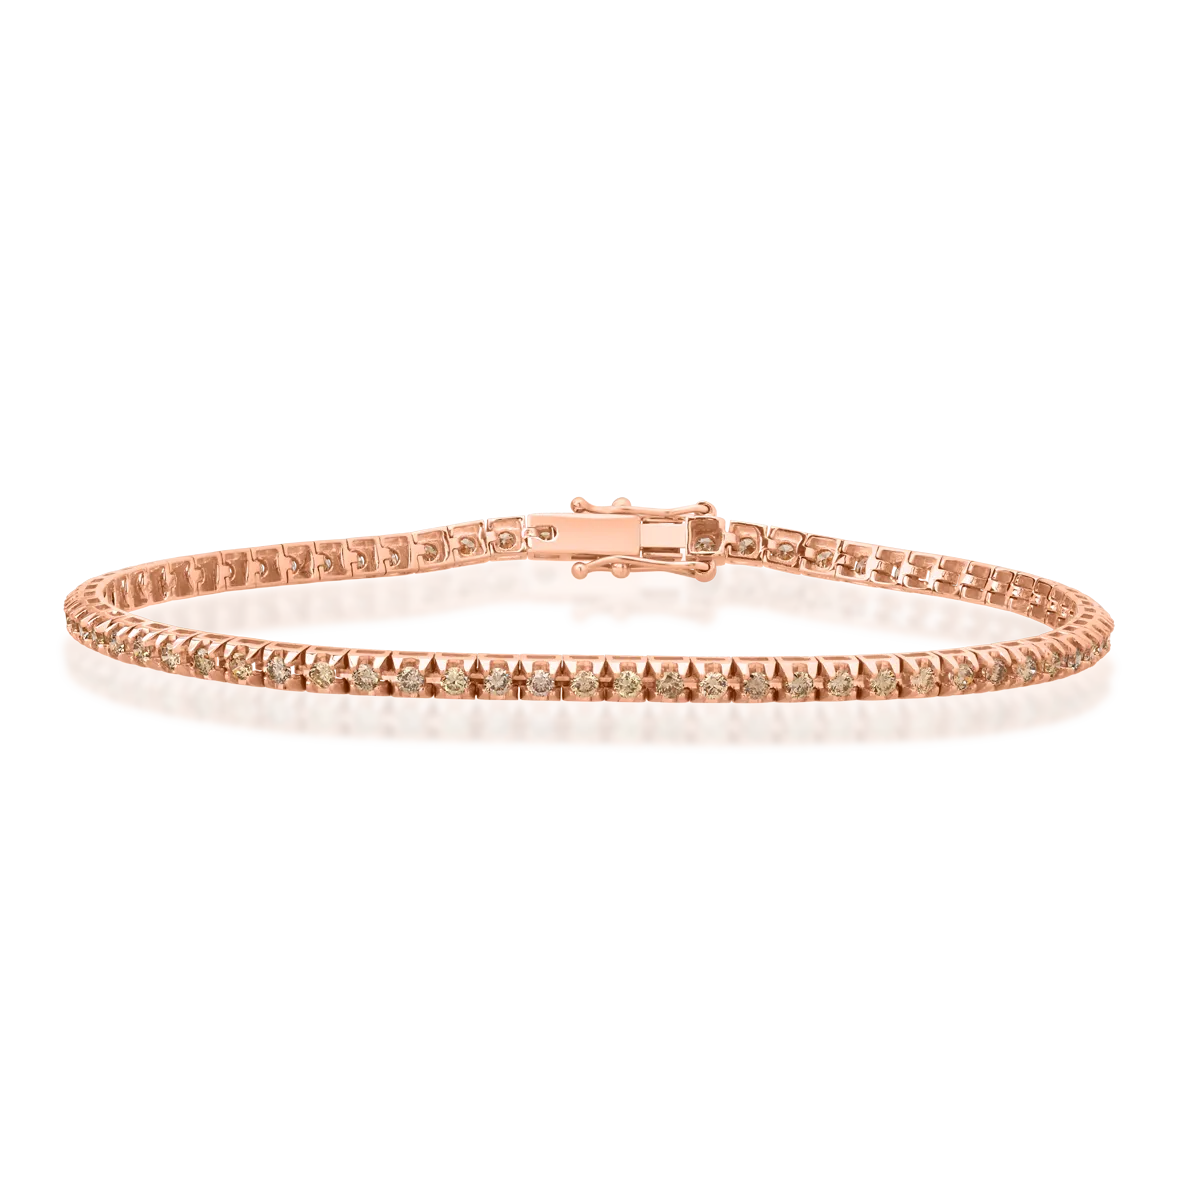 18K rose gold tennis bracelet with 1.5ct brown diamonds